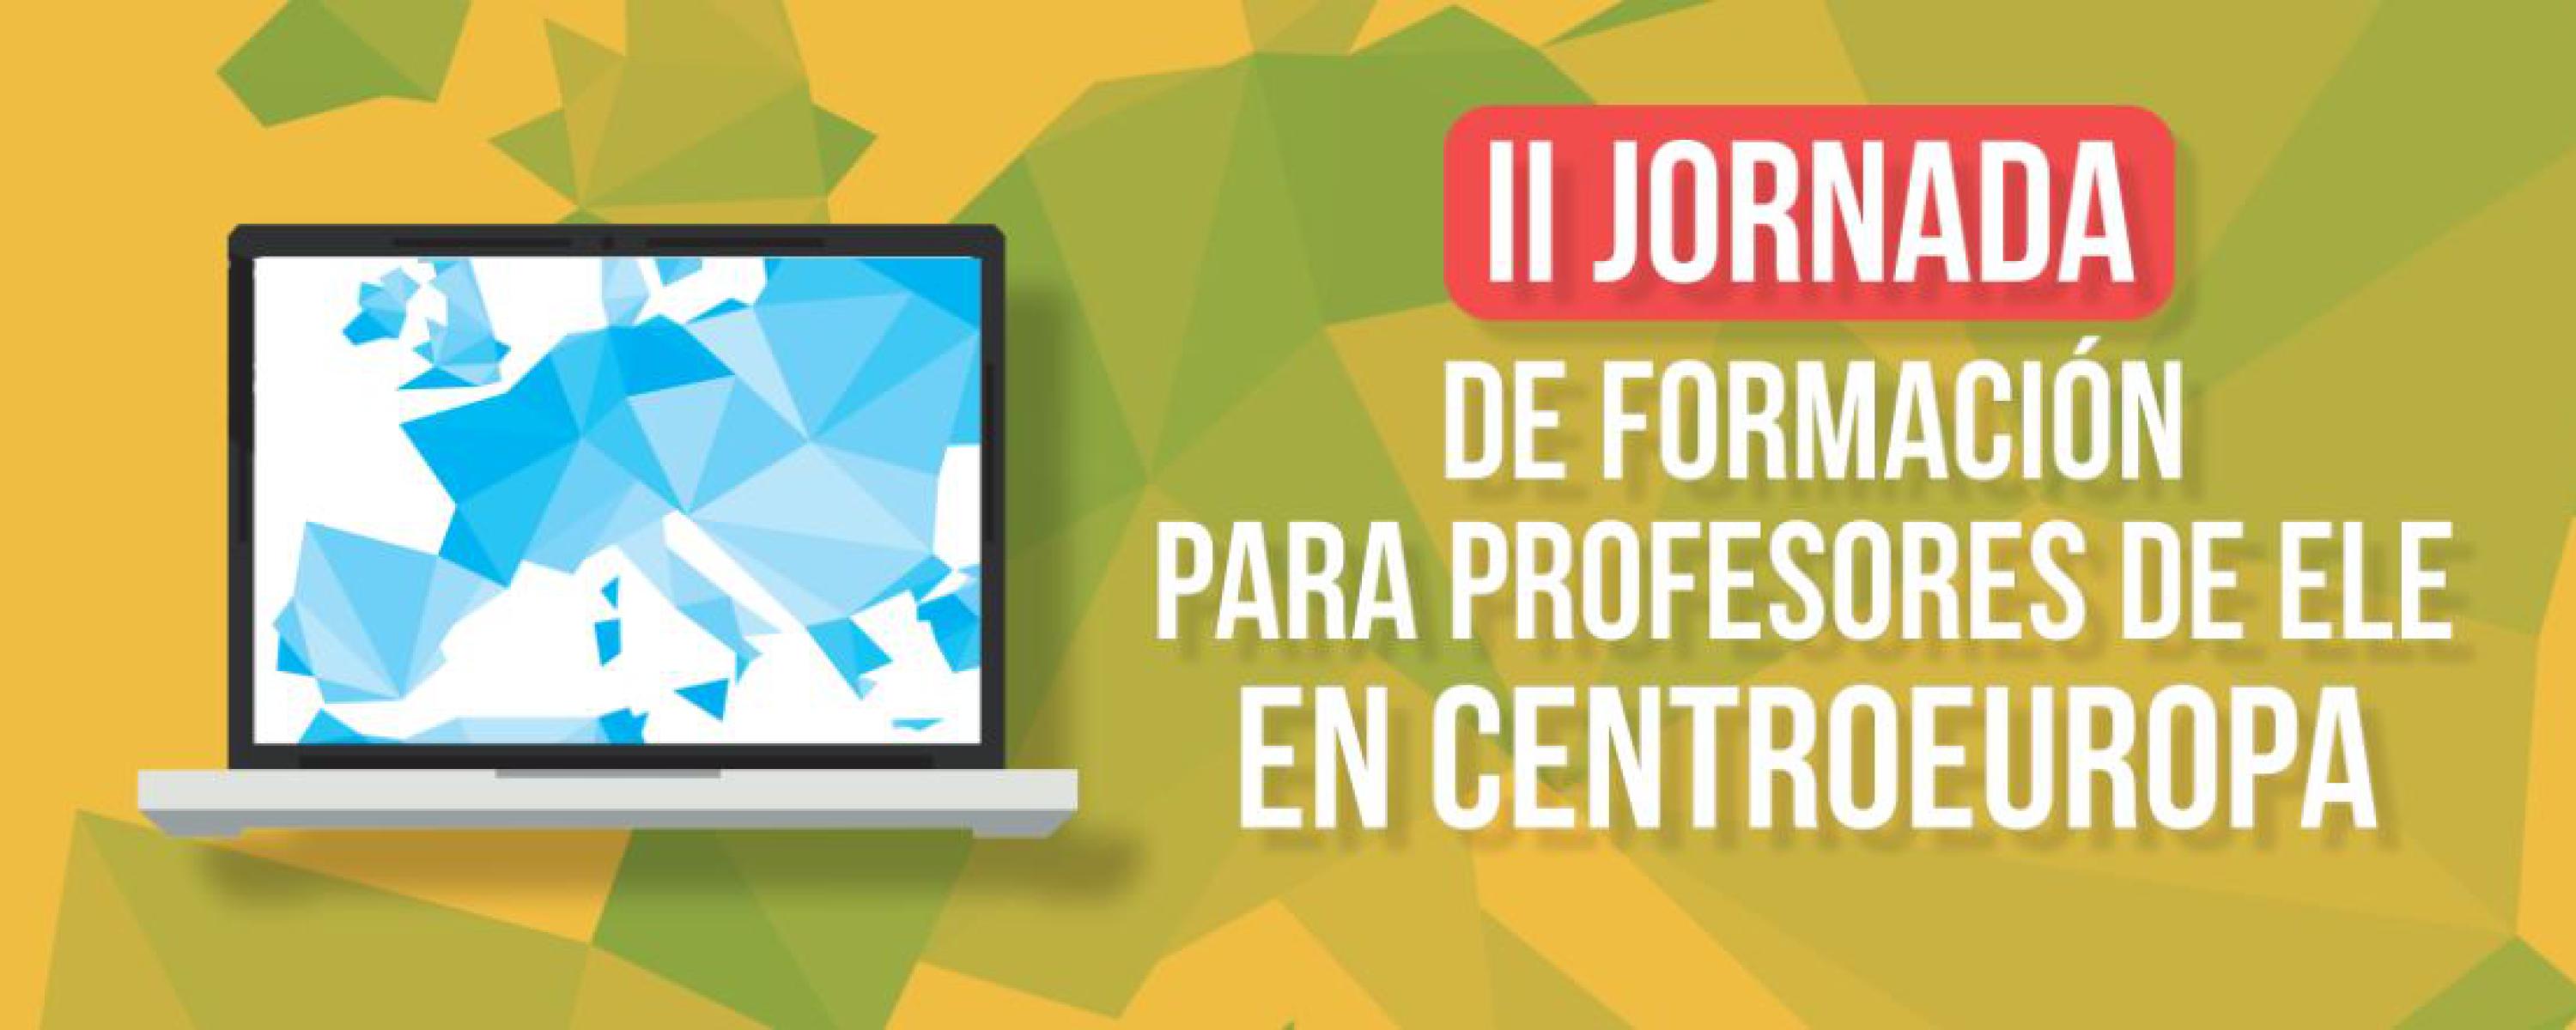 II Jornada de Formación para profesores de ELE en Centroeuropa 